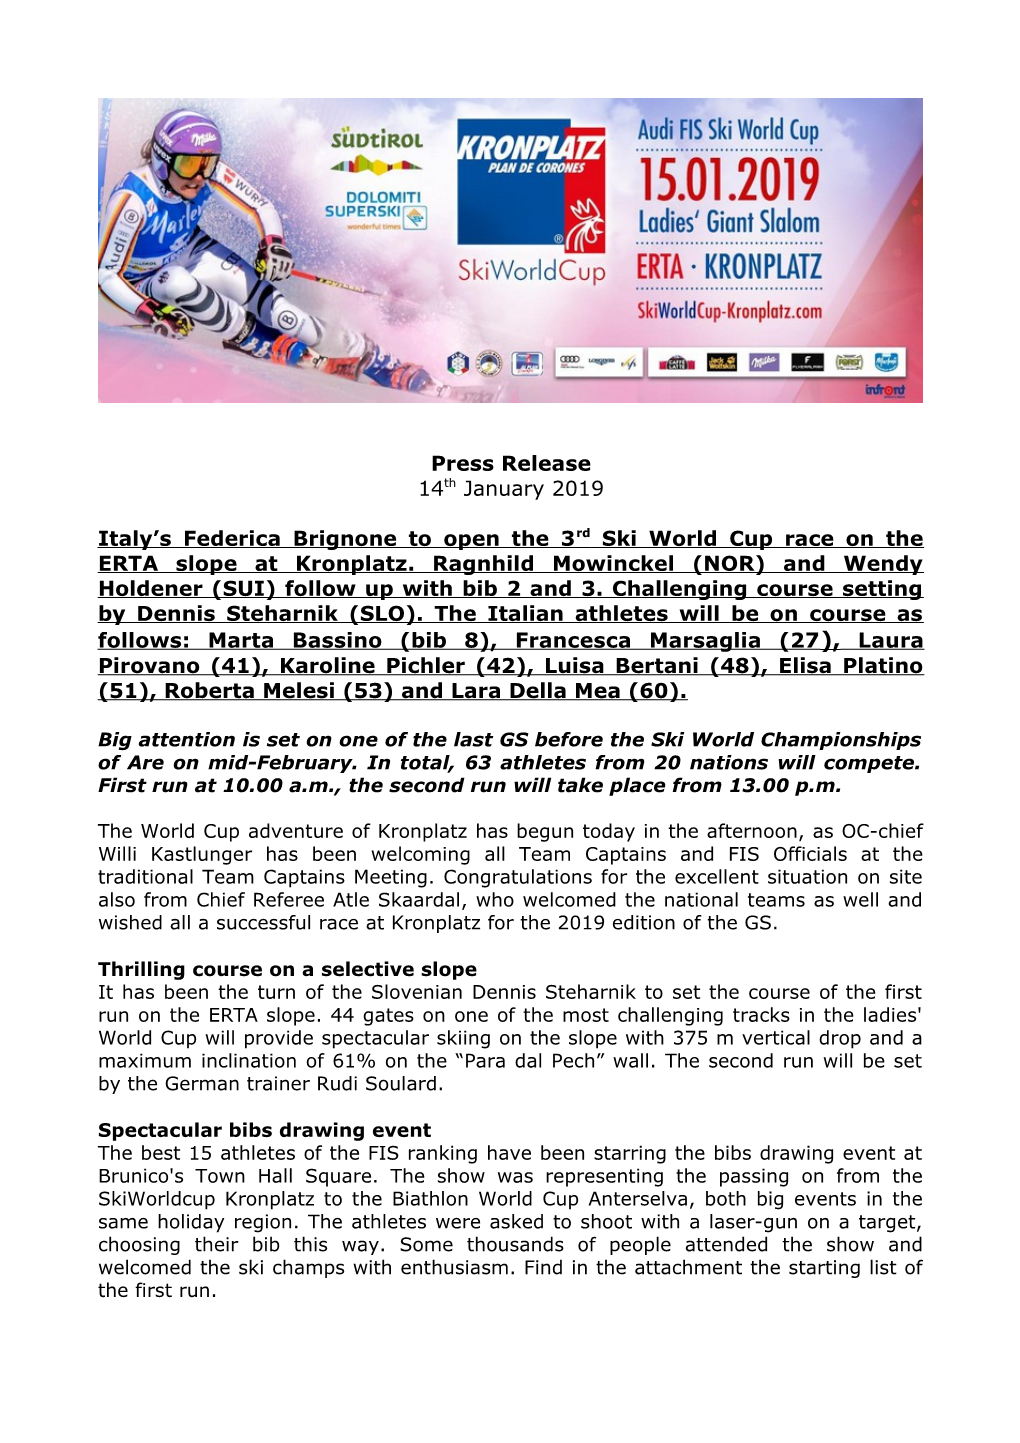 Press Release 14Th January 2019 Italy's Federica Brignone to Open